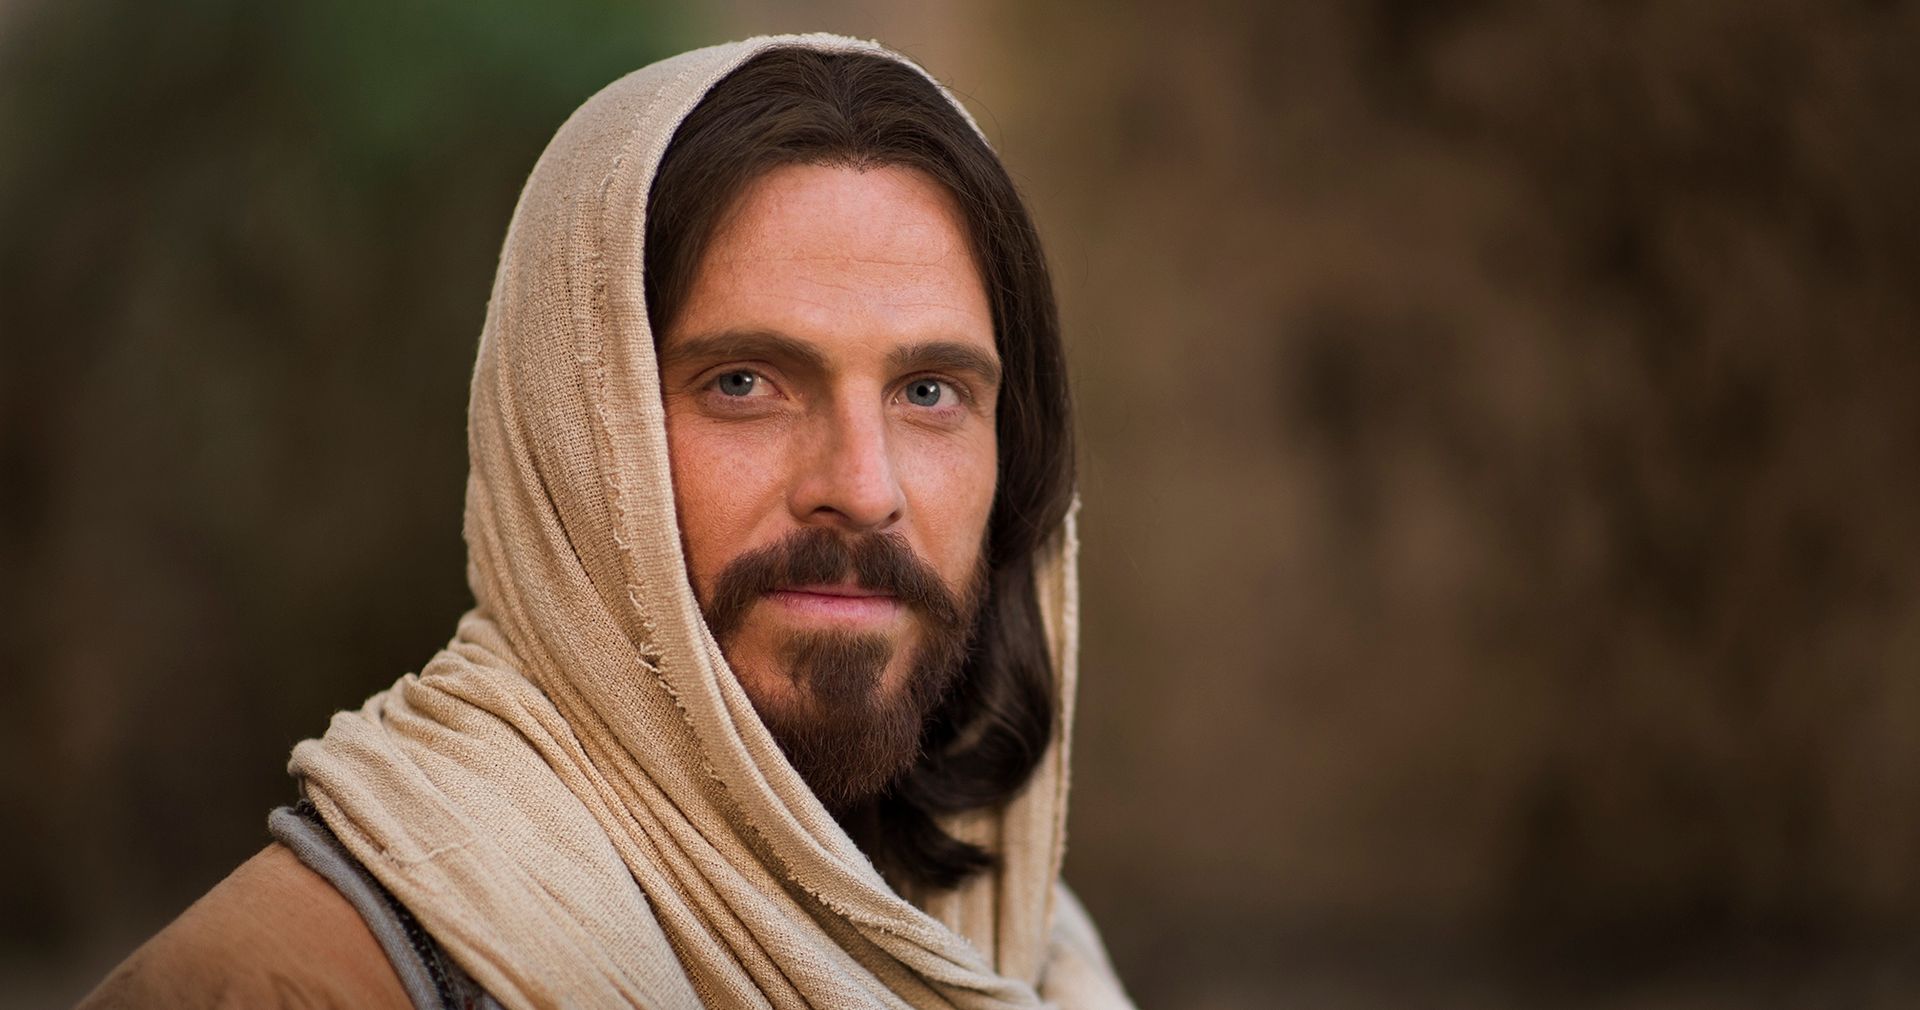 Portrait of actor portraying Jesus Christ